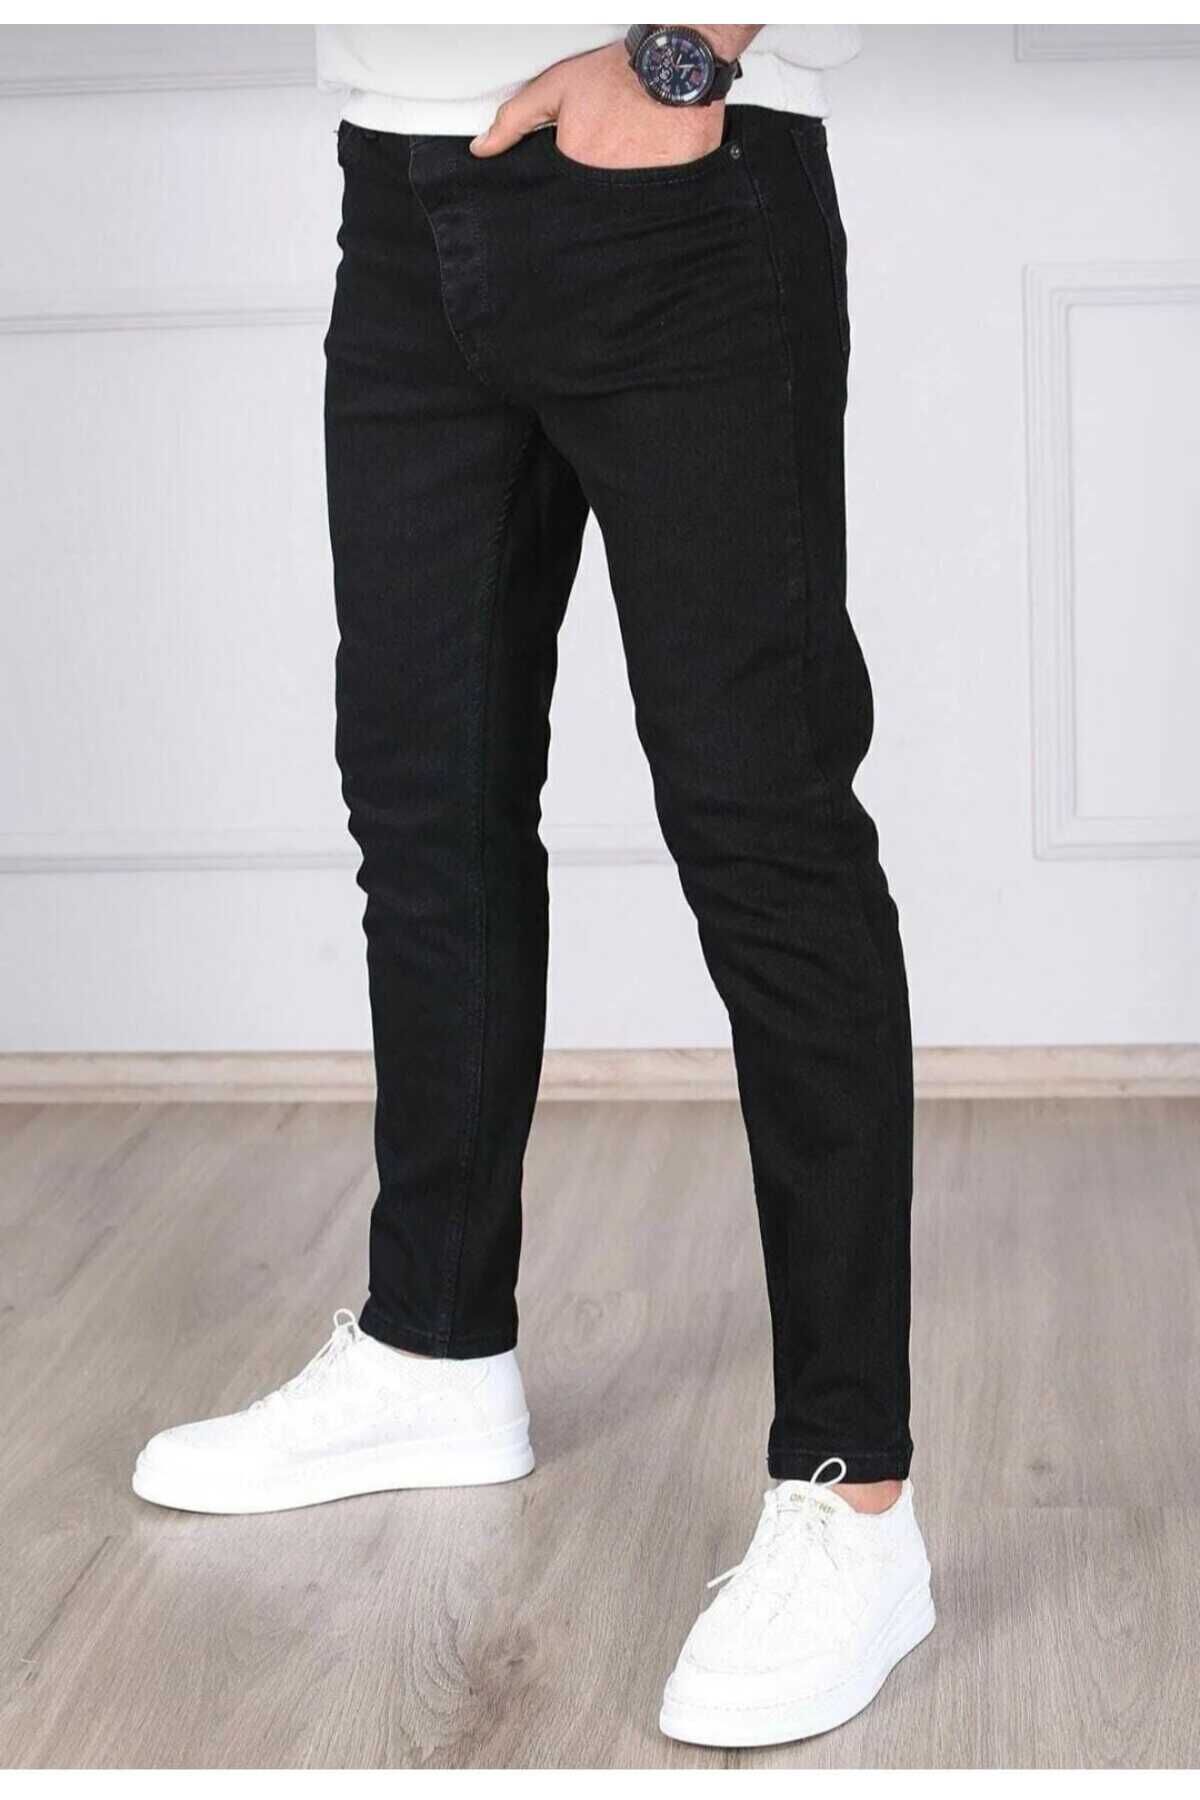 Lina Jean Erkek Siyah Slim Fit Likralı Esnek Jeans Erkek Kot Pantolon